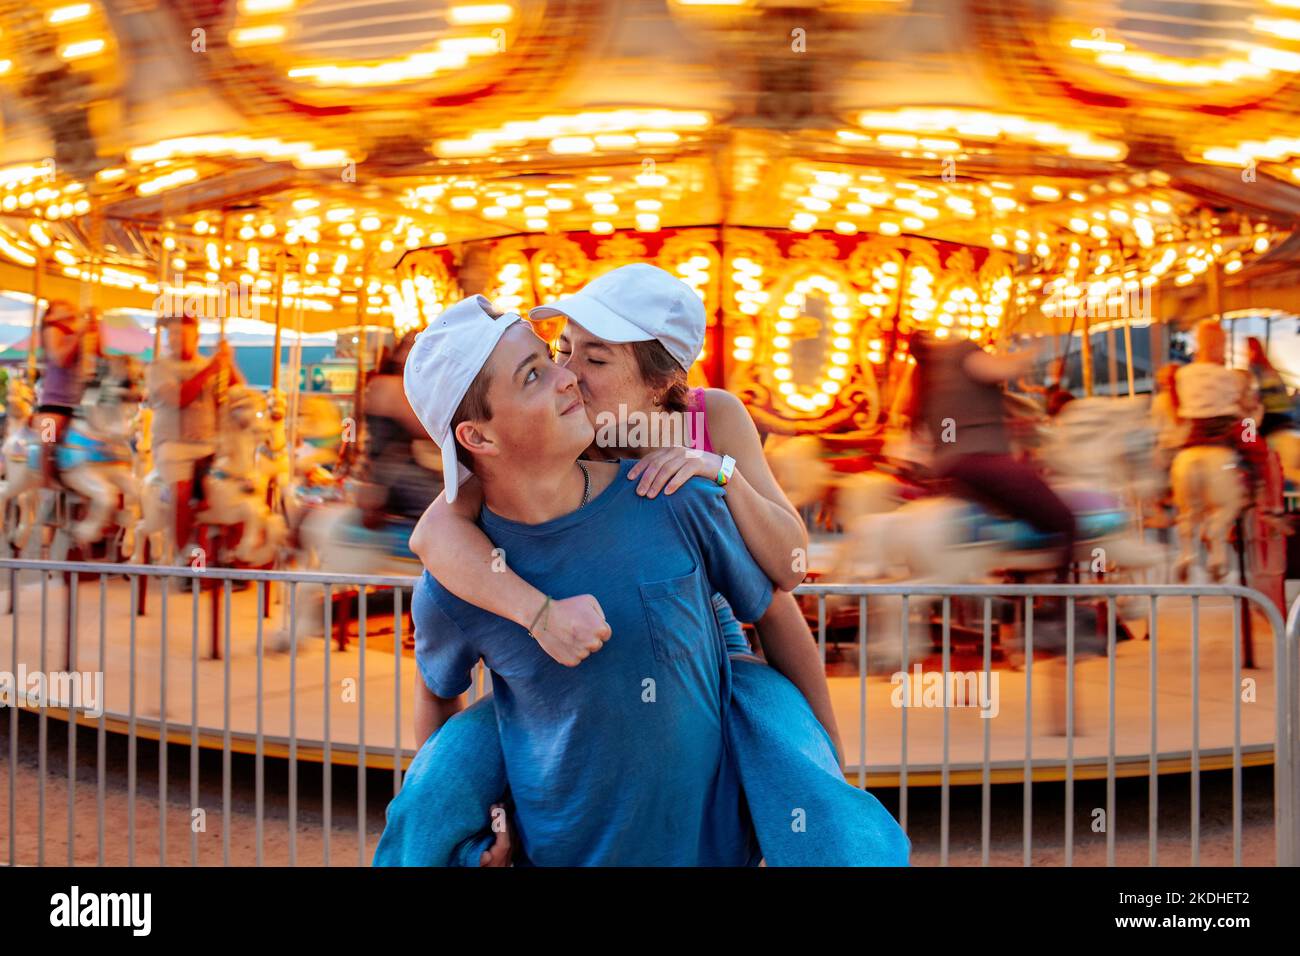 Teen girl kissing cheek of shocked teen boy in front of carousel Stock Photo